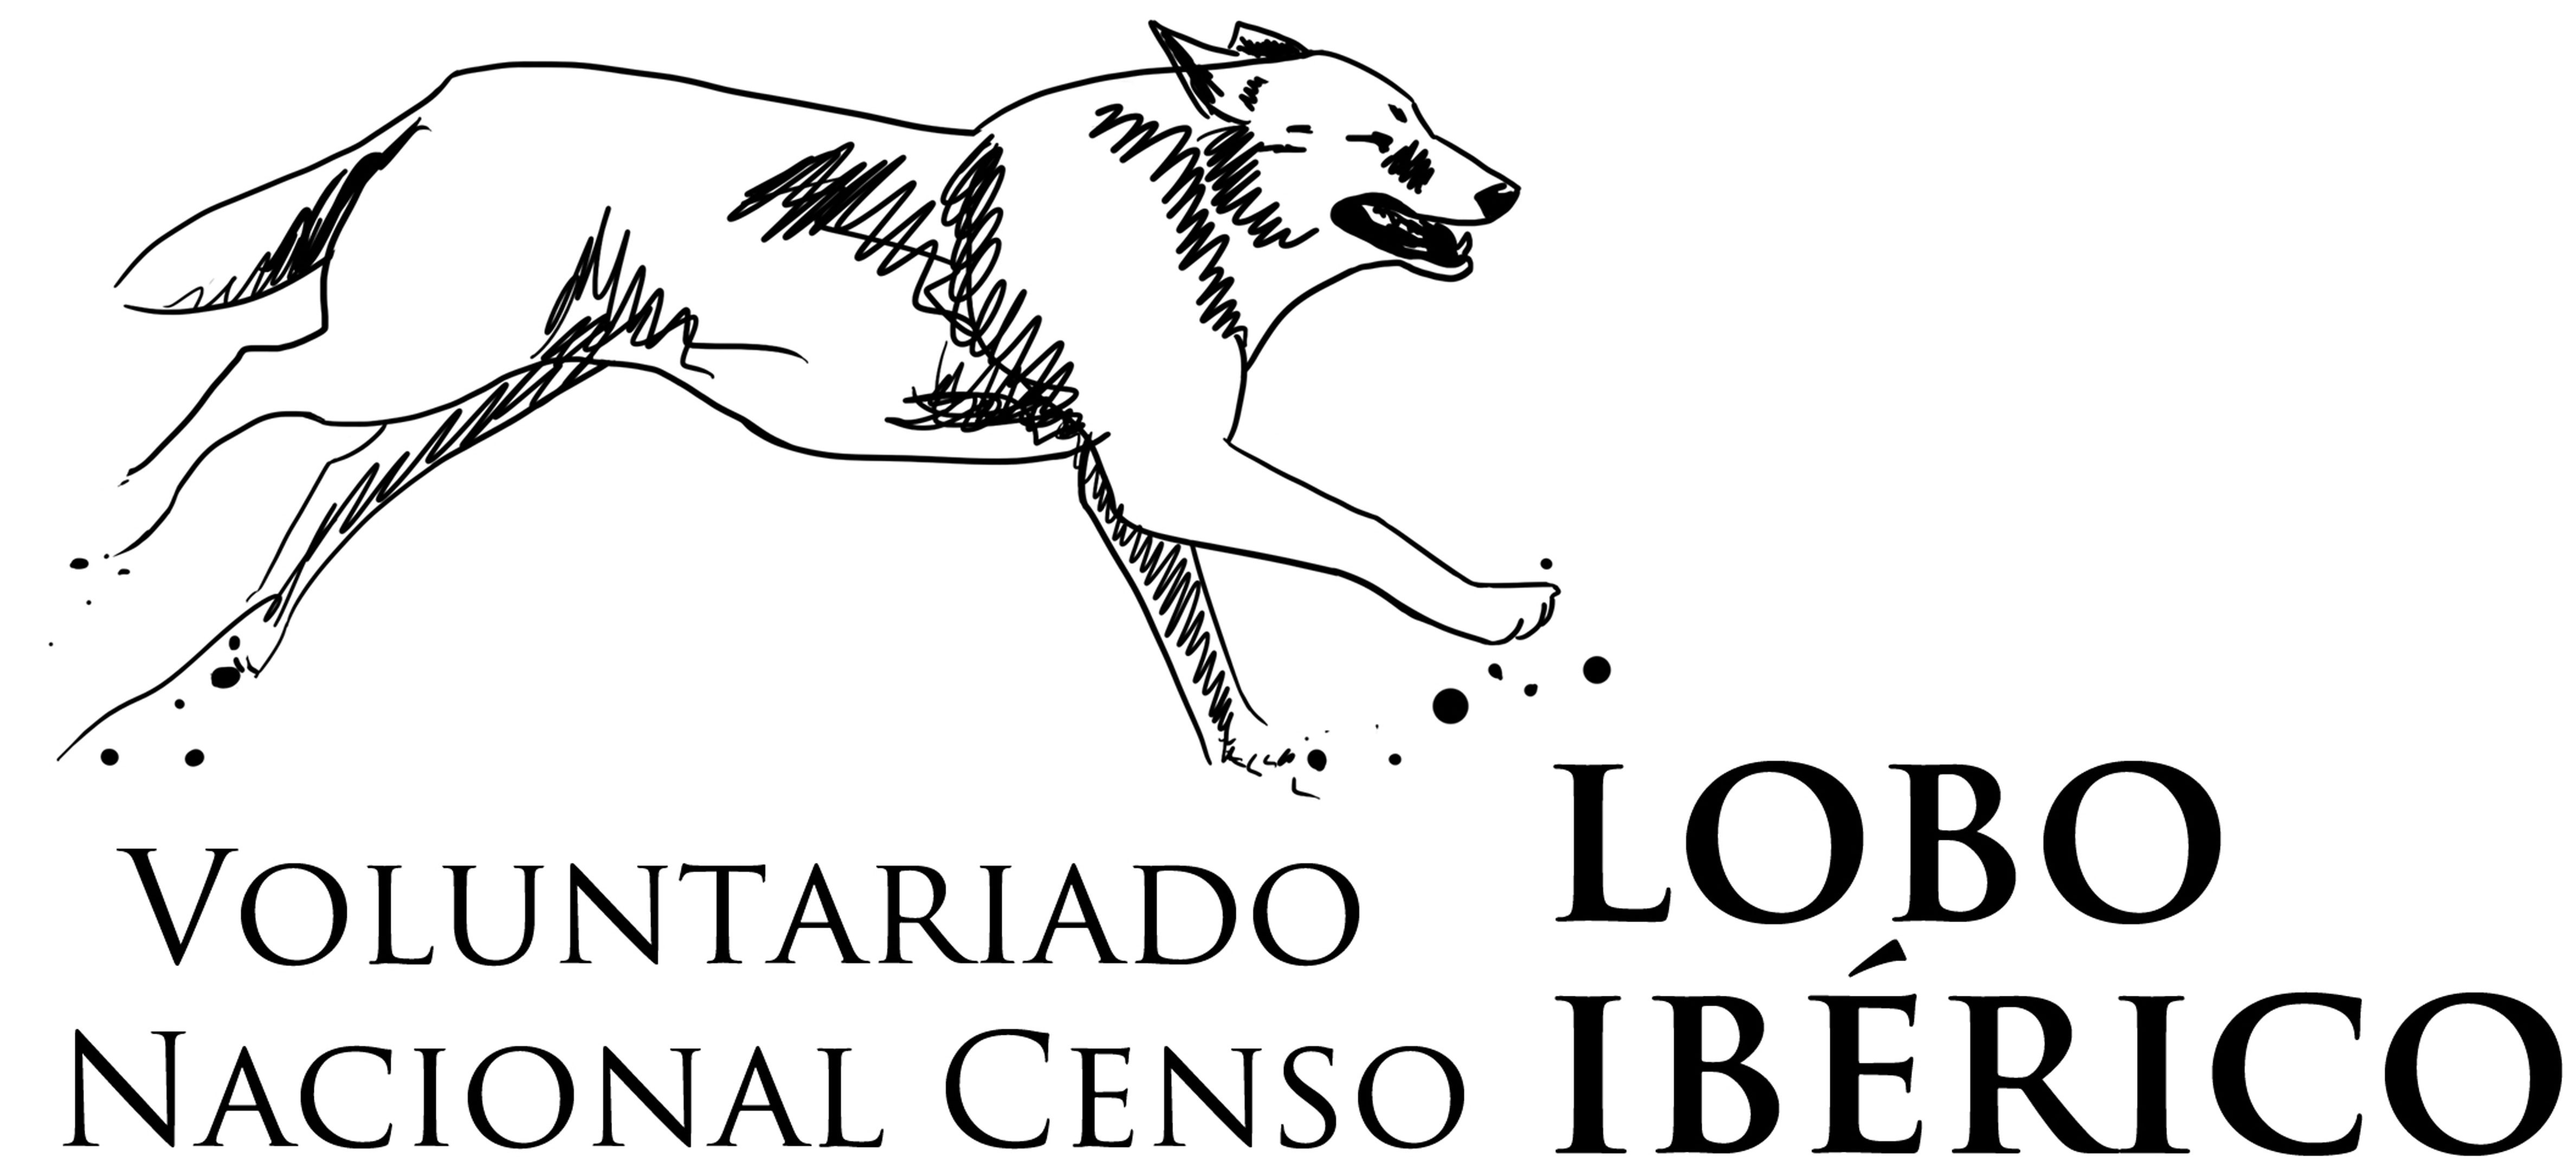 Censo lobo iberico